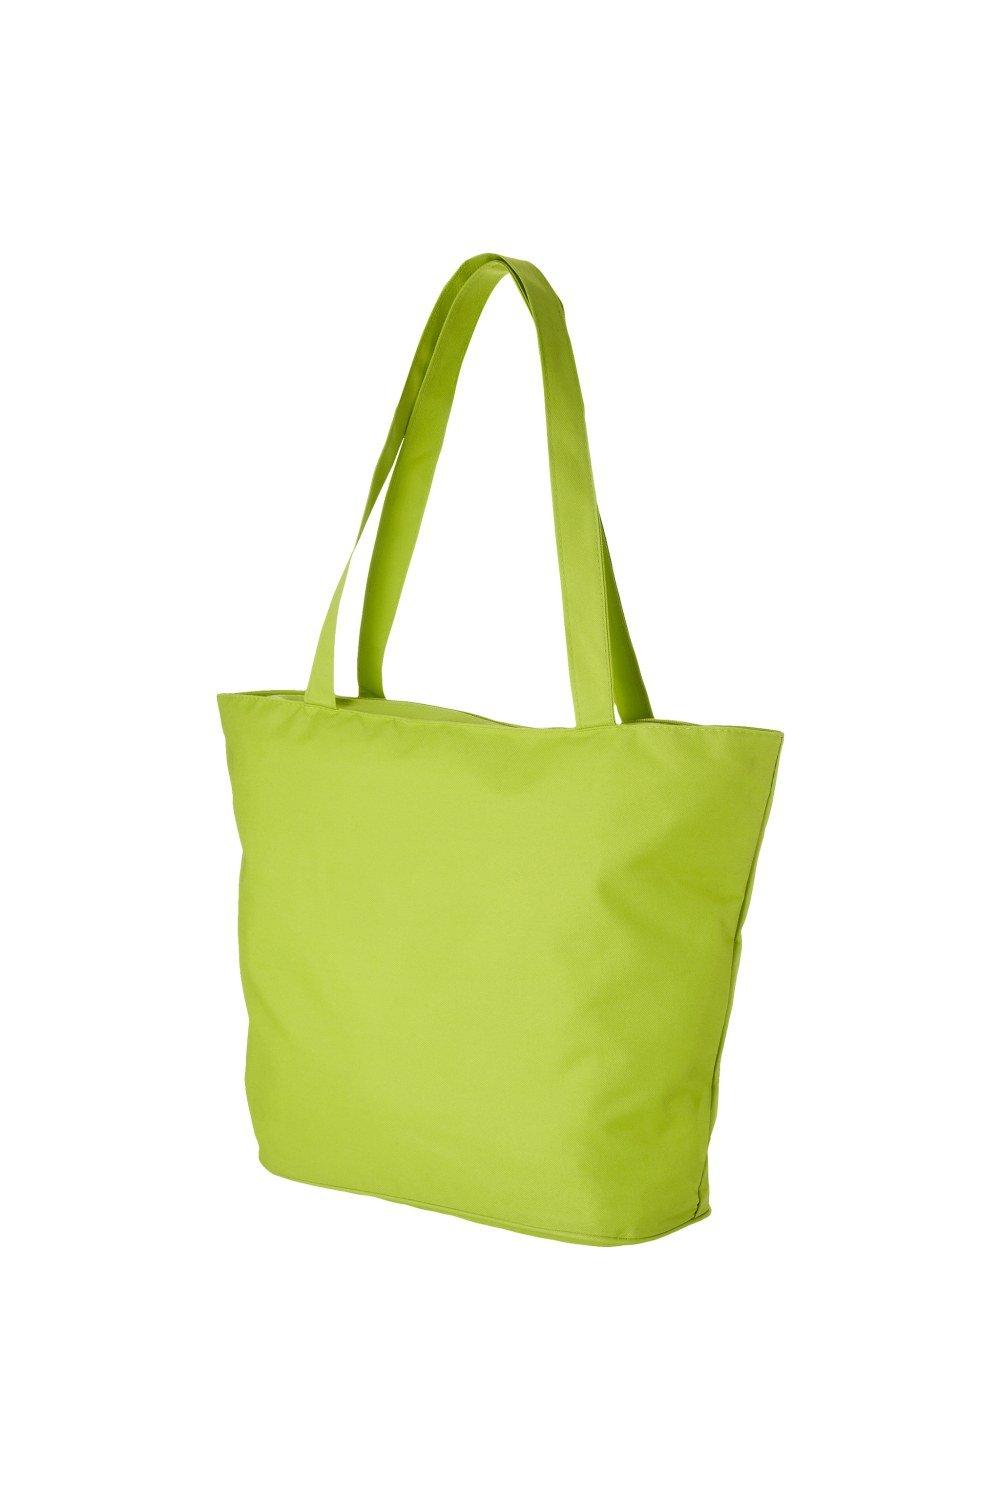 Пляжная сумка-тоут Panama (2 шт.) Bullet, зеленый цена и фото